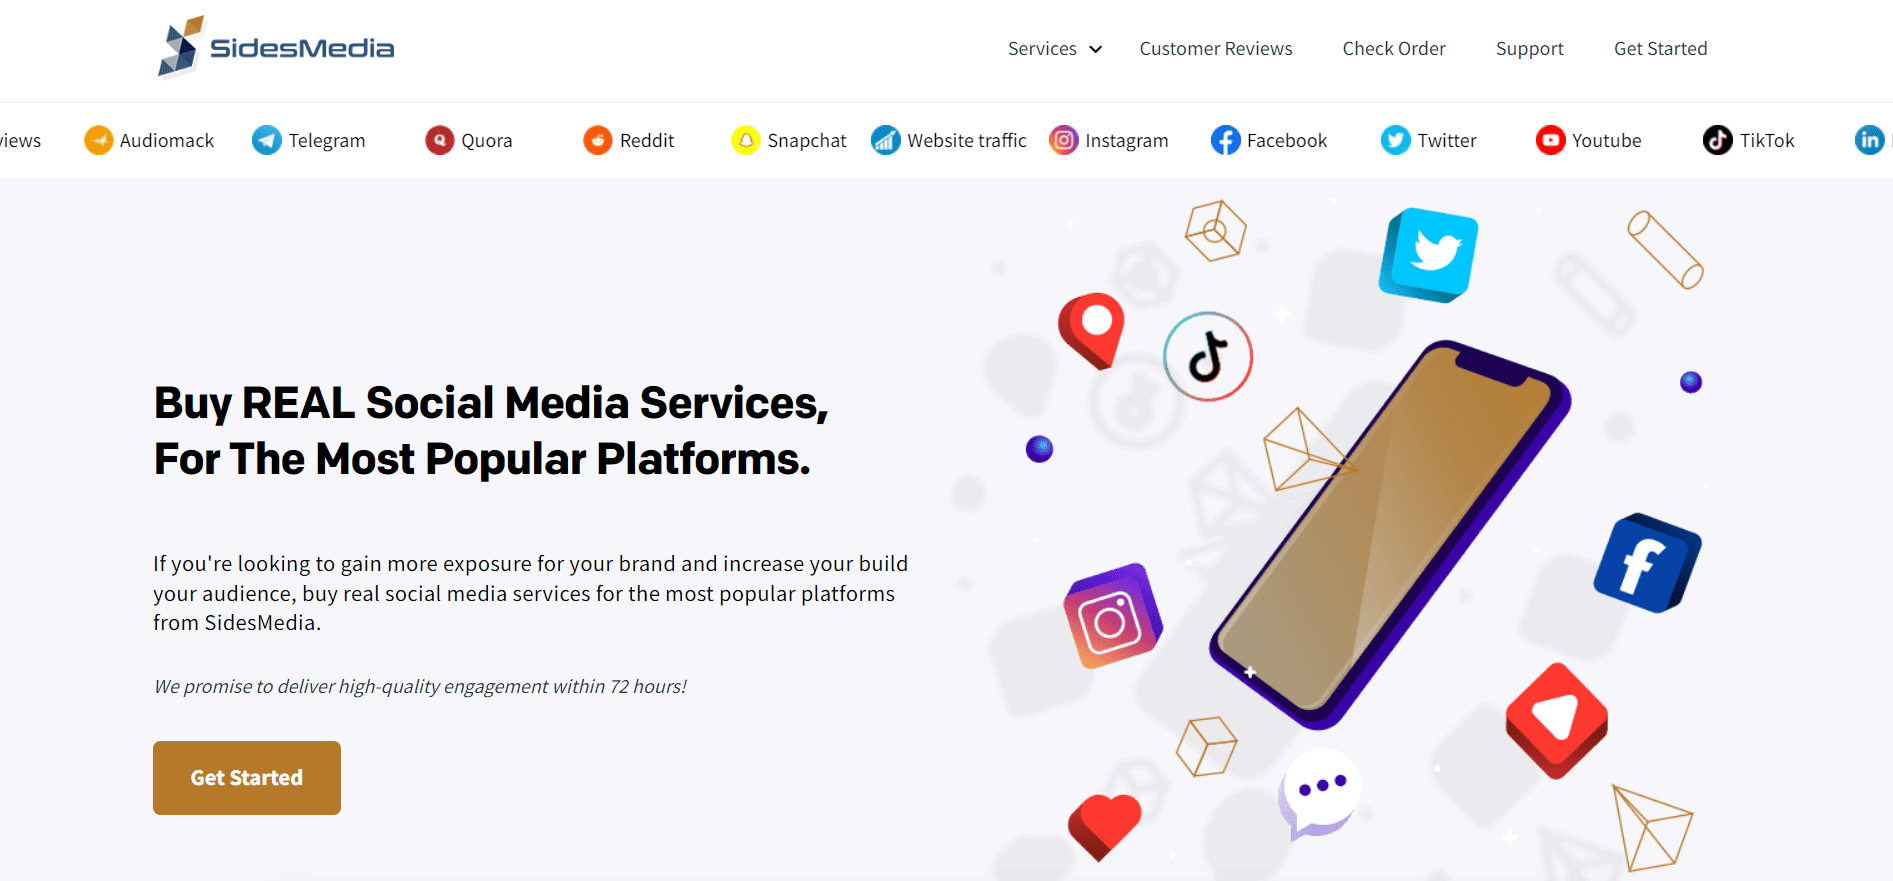 SidesMedia website screengrab